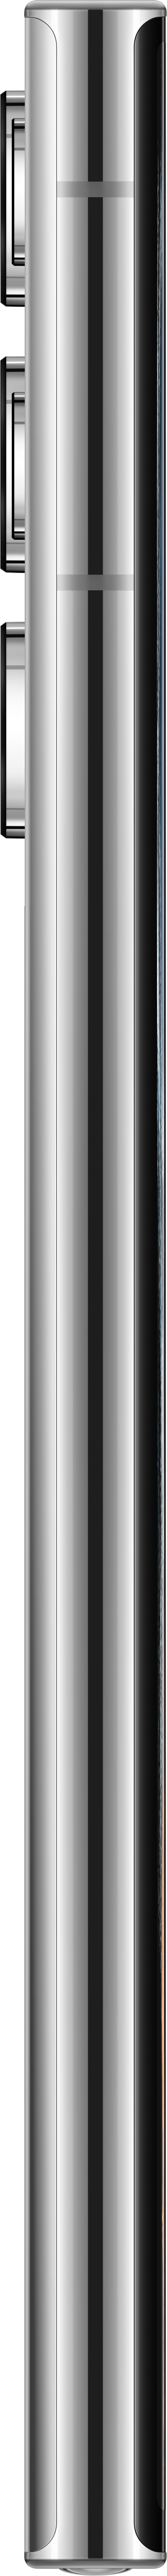 Samsung Galaxy S22 Ultra 256GB (Unlocked) Phantom White SM 